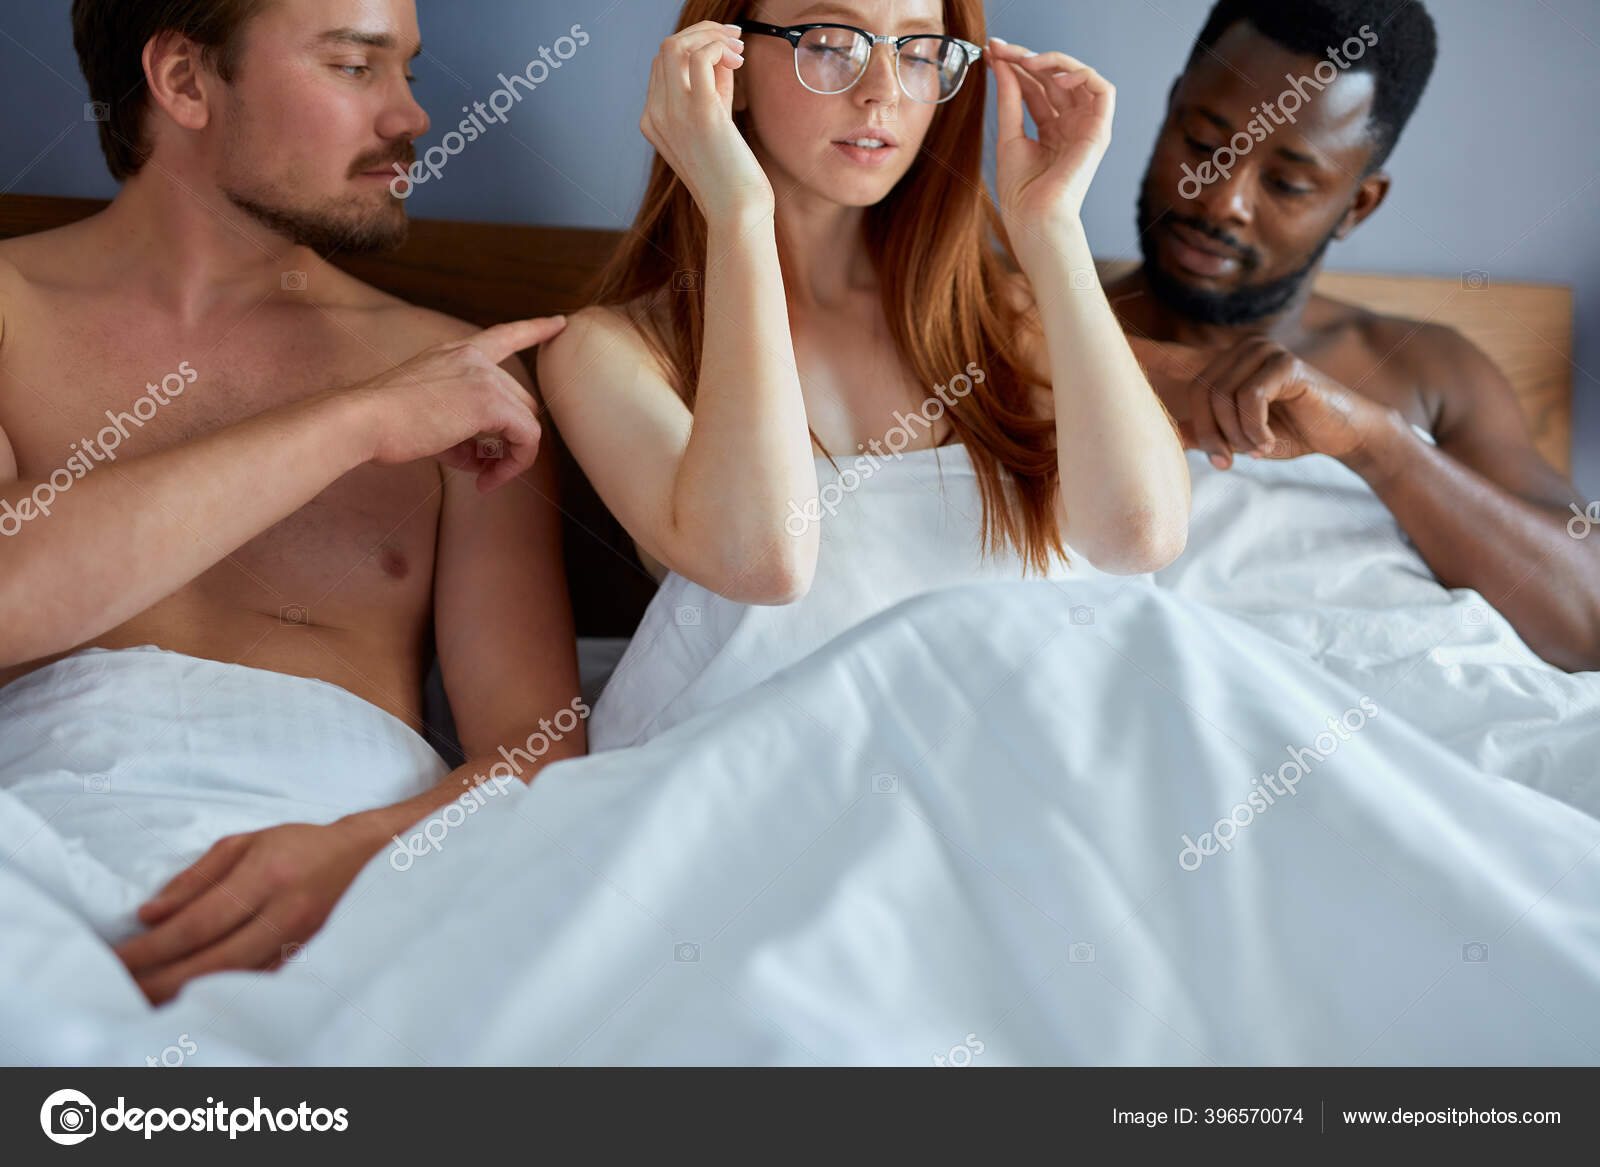 Threesome concept image